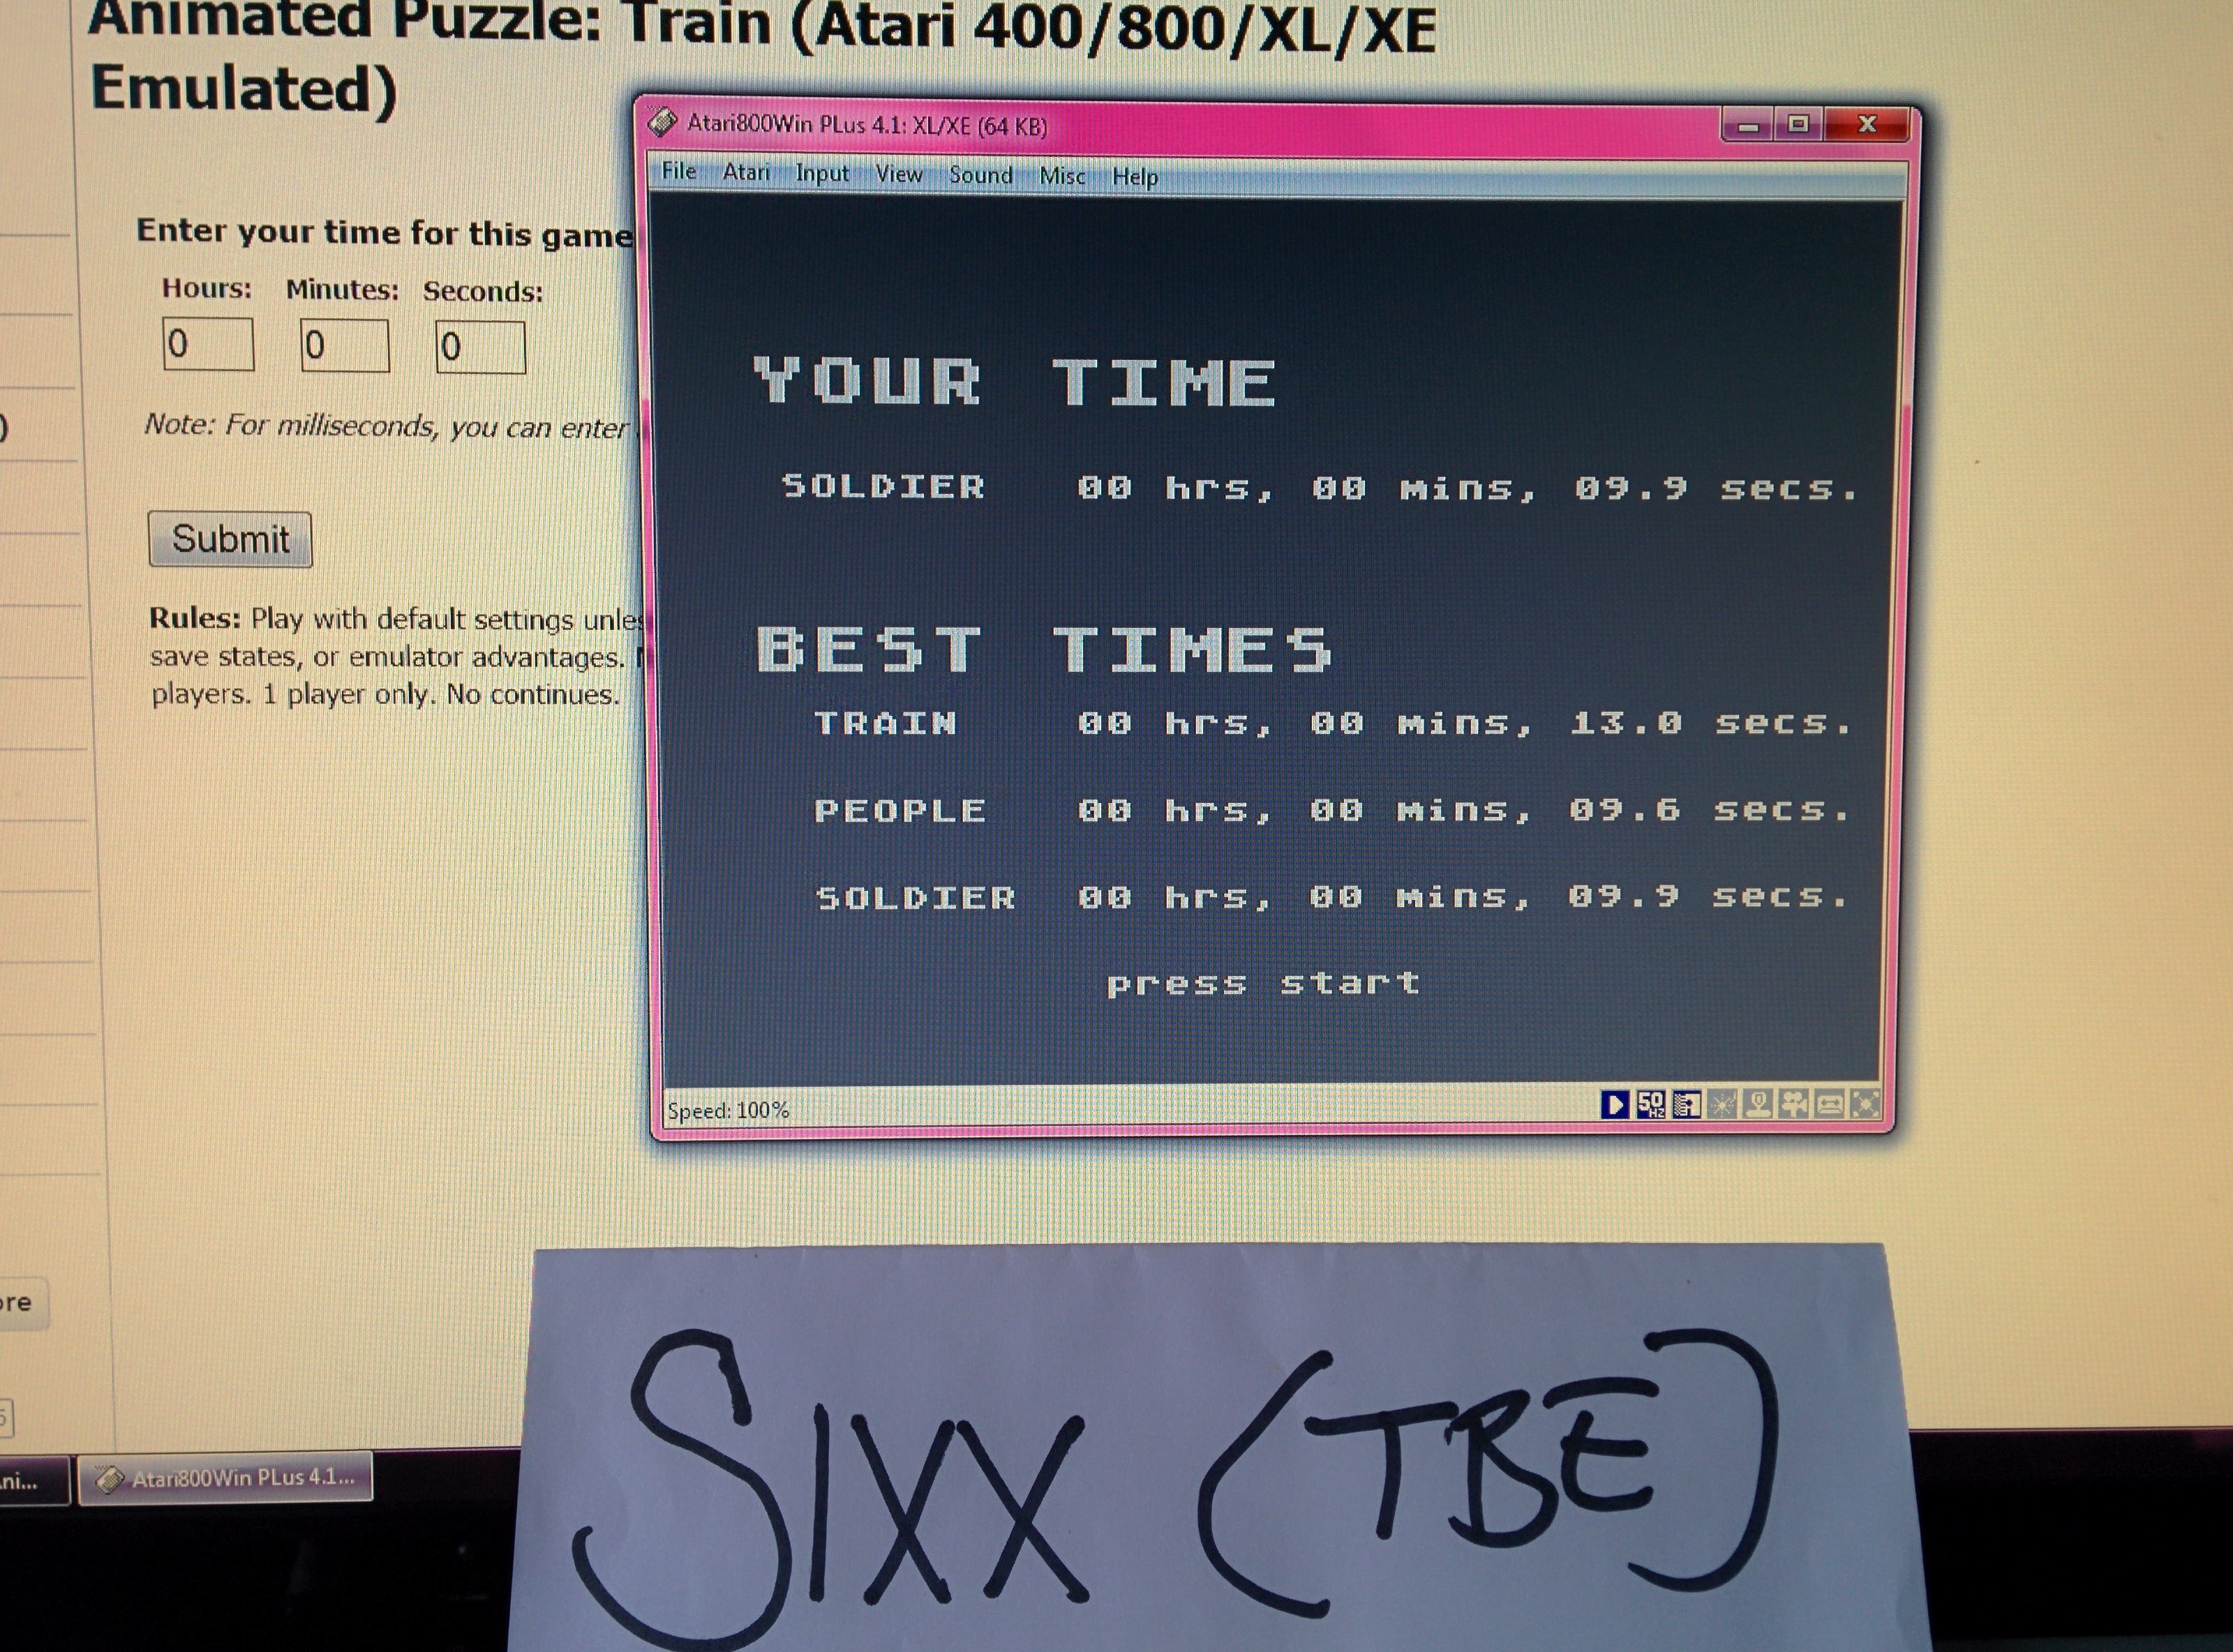 Sixx: Animated Puzzle: Train (Atari 400/800/XL/XE Emulated) 0:00:13 points on 2014-05-01 13:33:15